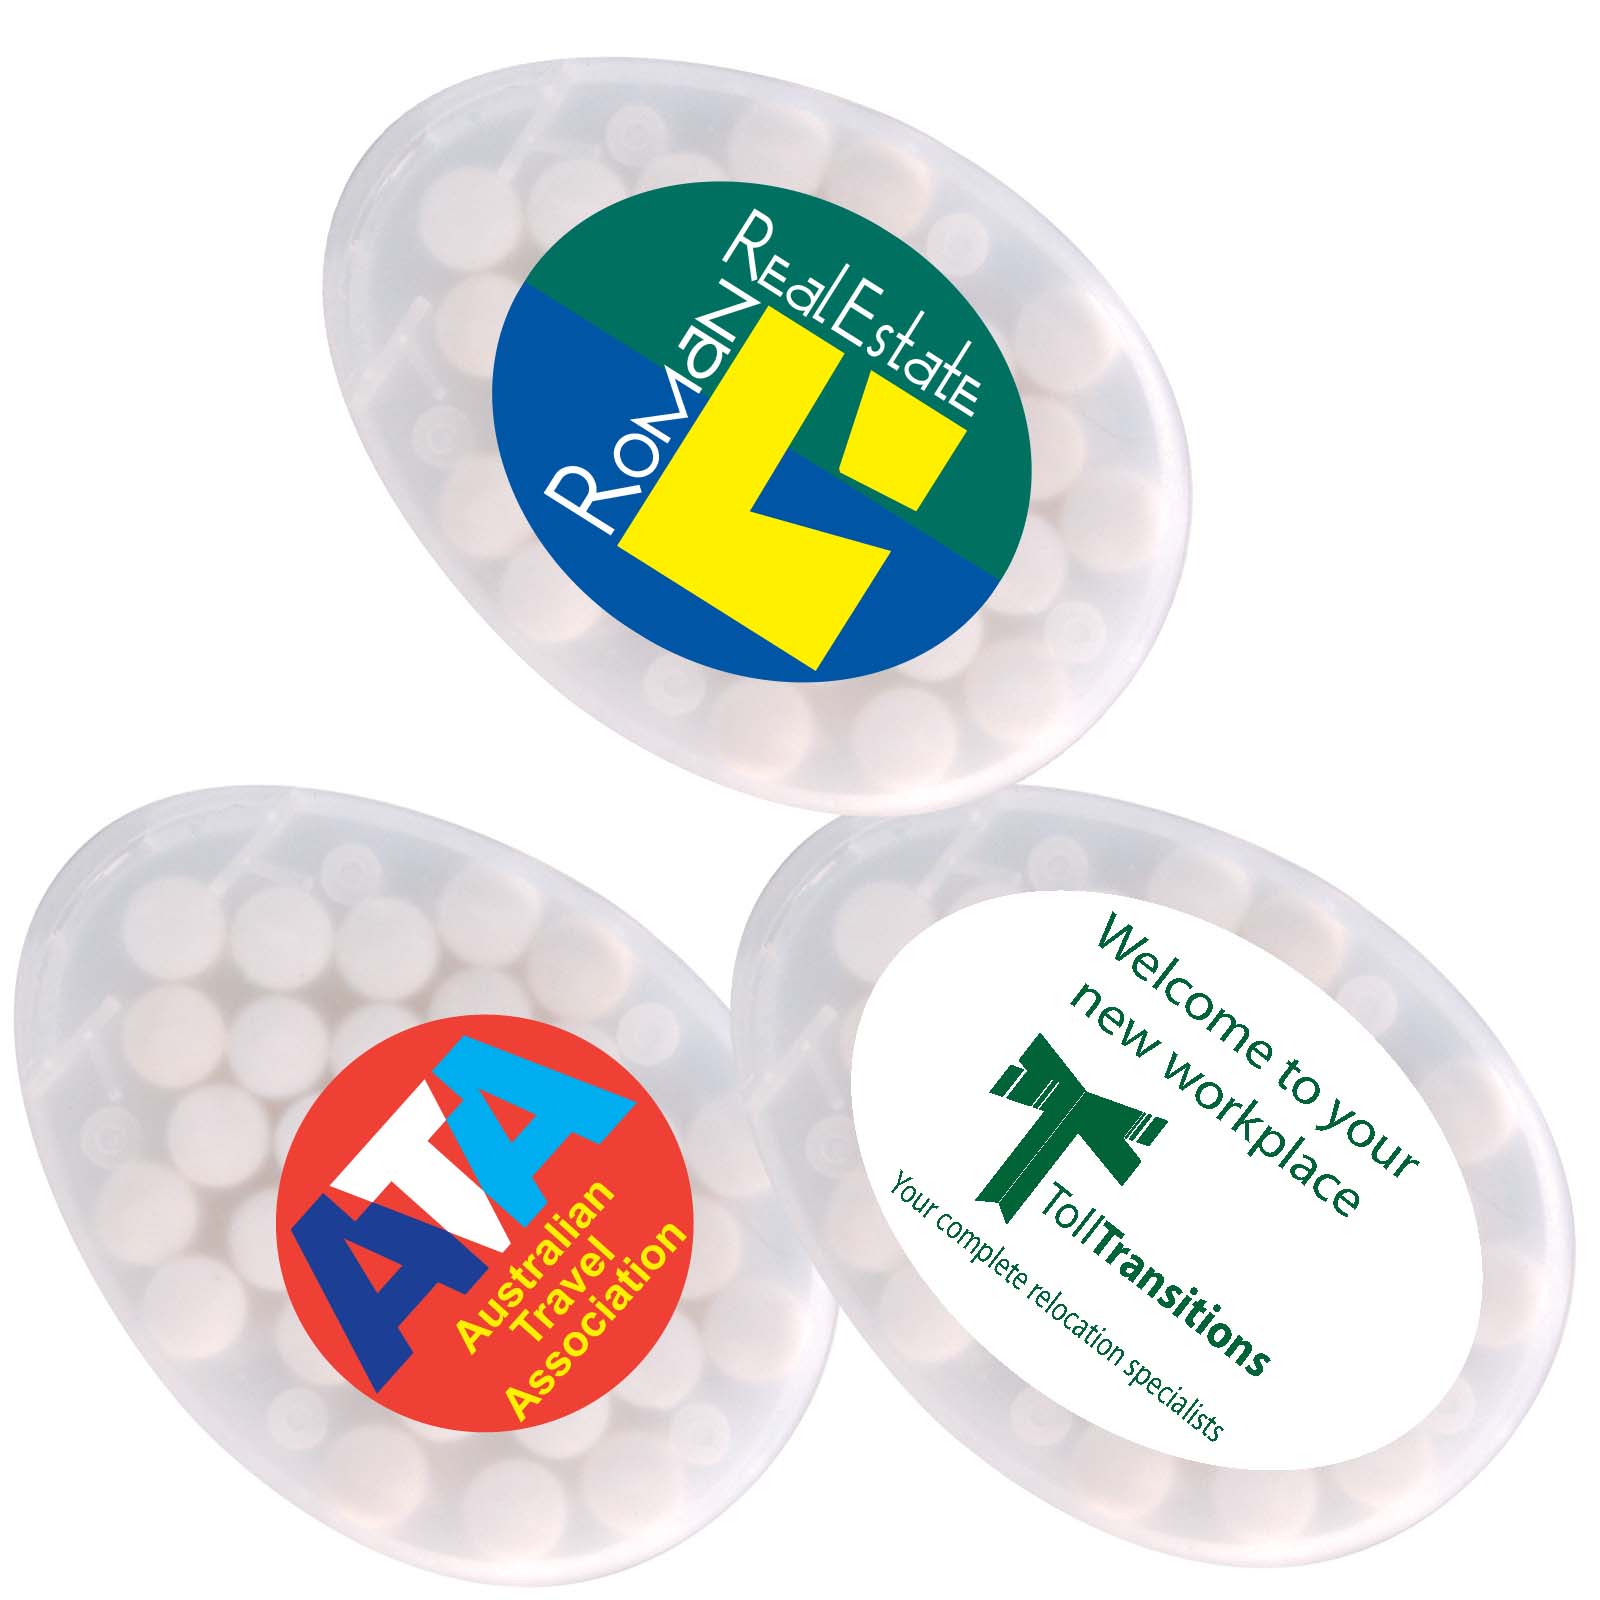 LL062 - Egg Shape Sugar Free Breath Mints